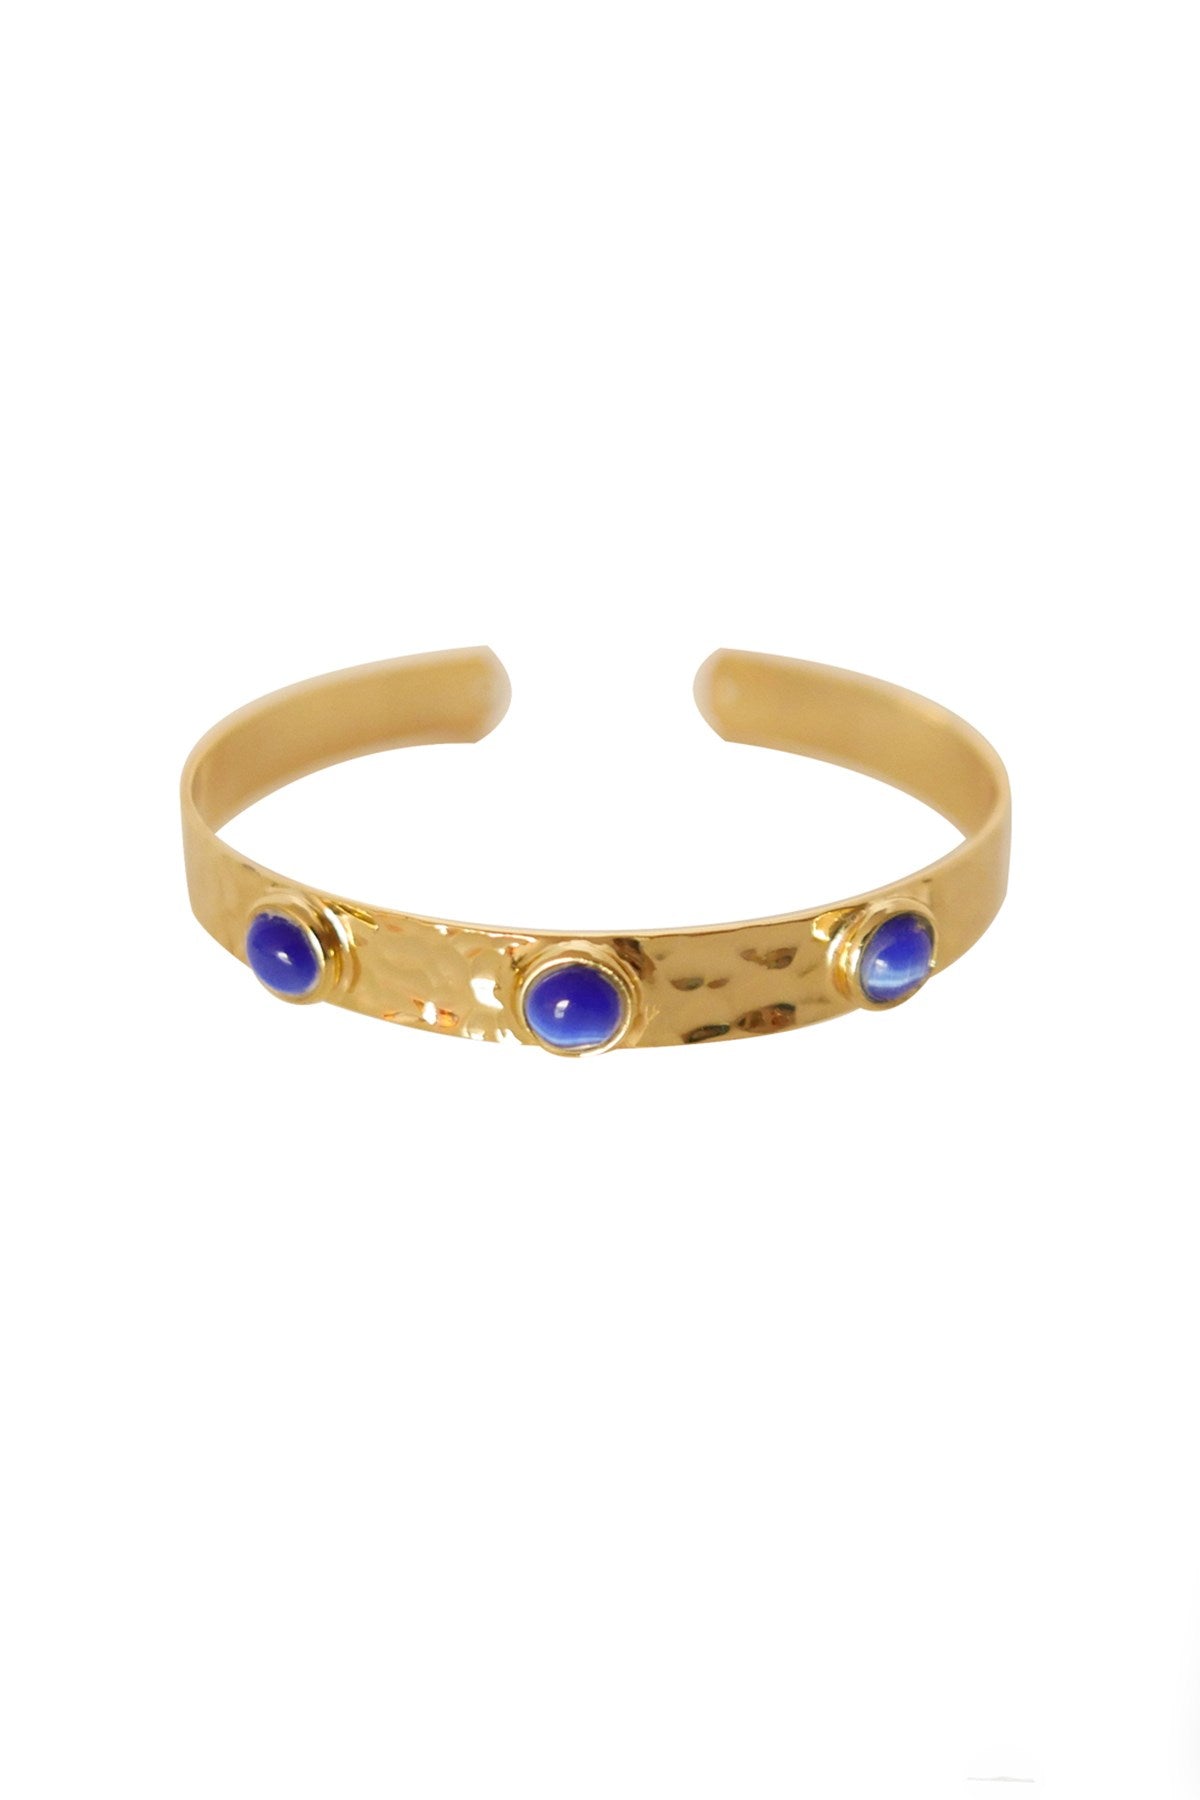 Navy Blue Cat Eye Bracelet Gold Plated